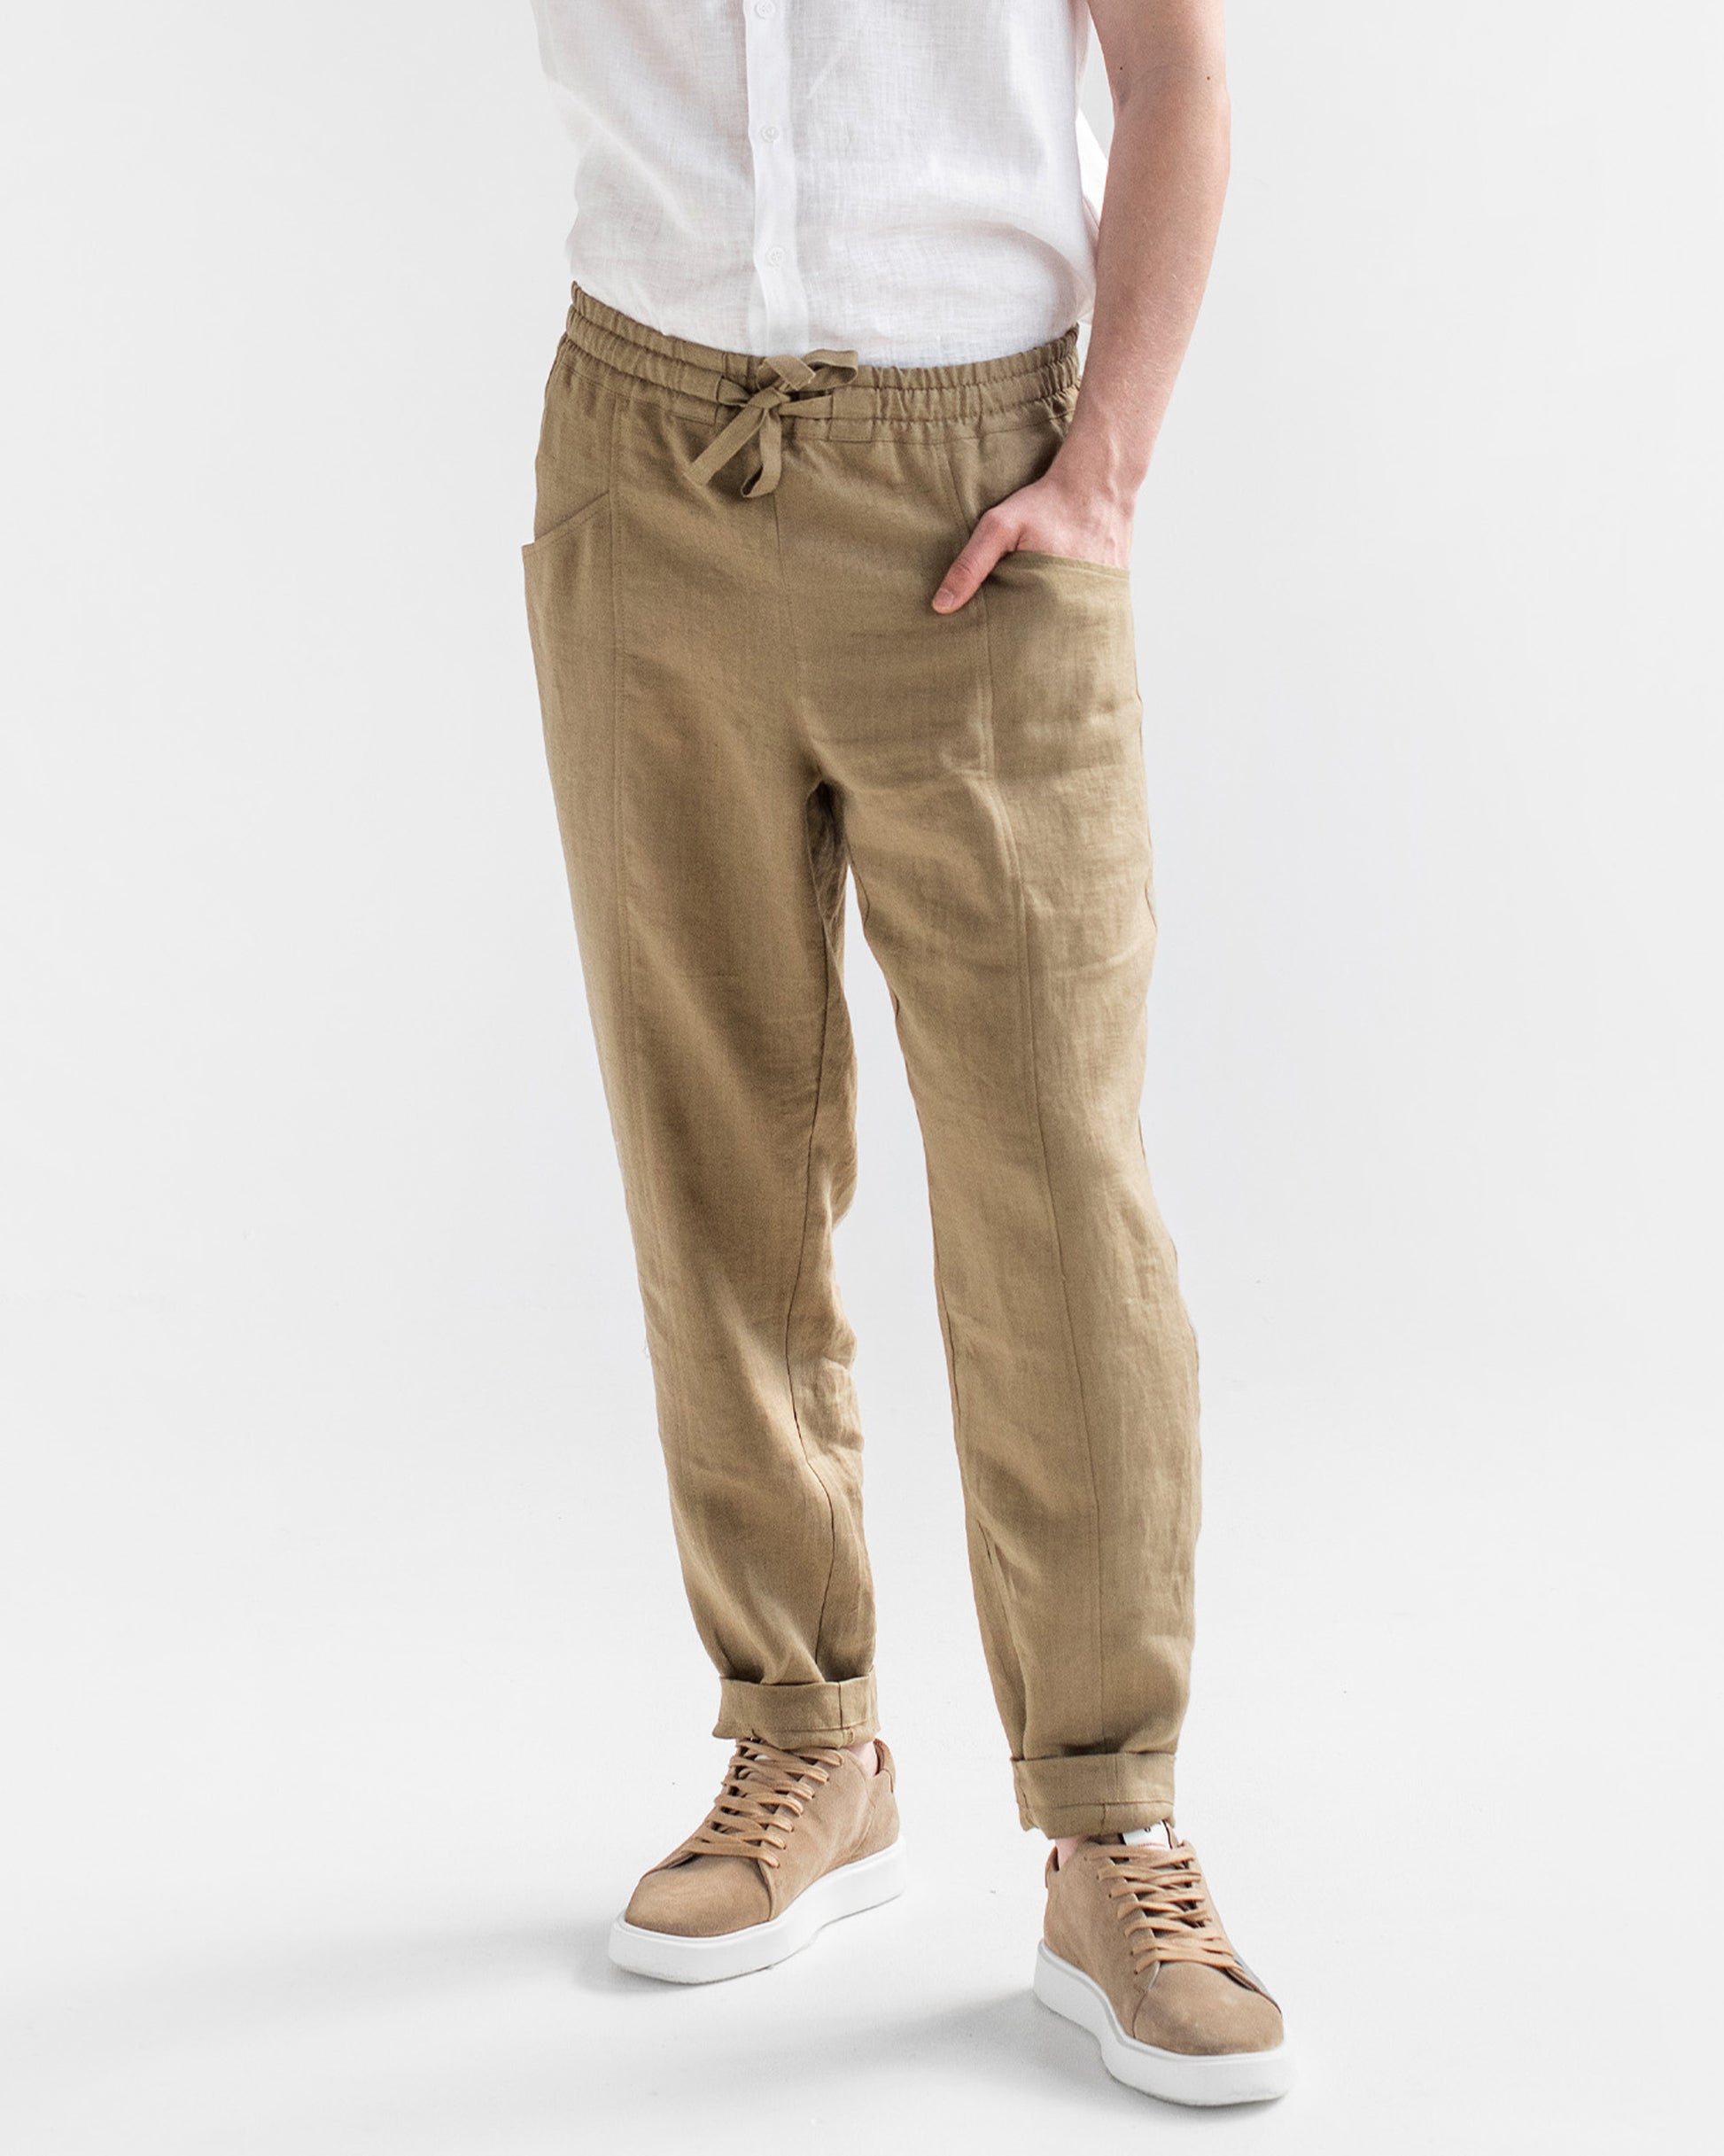 Men's 100% European Linen Pants